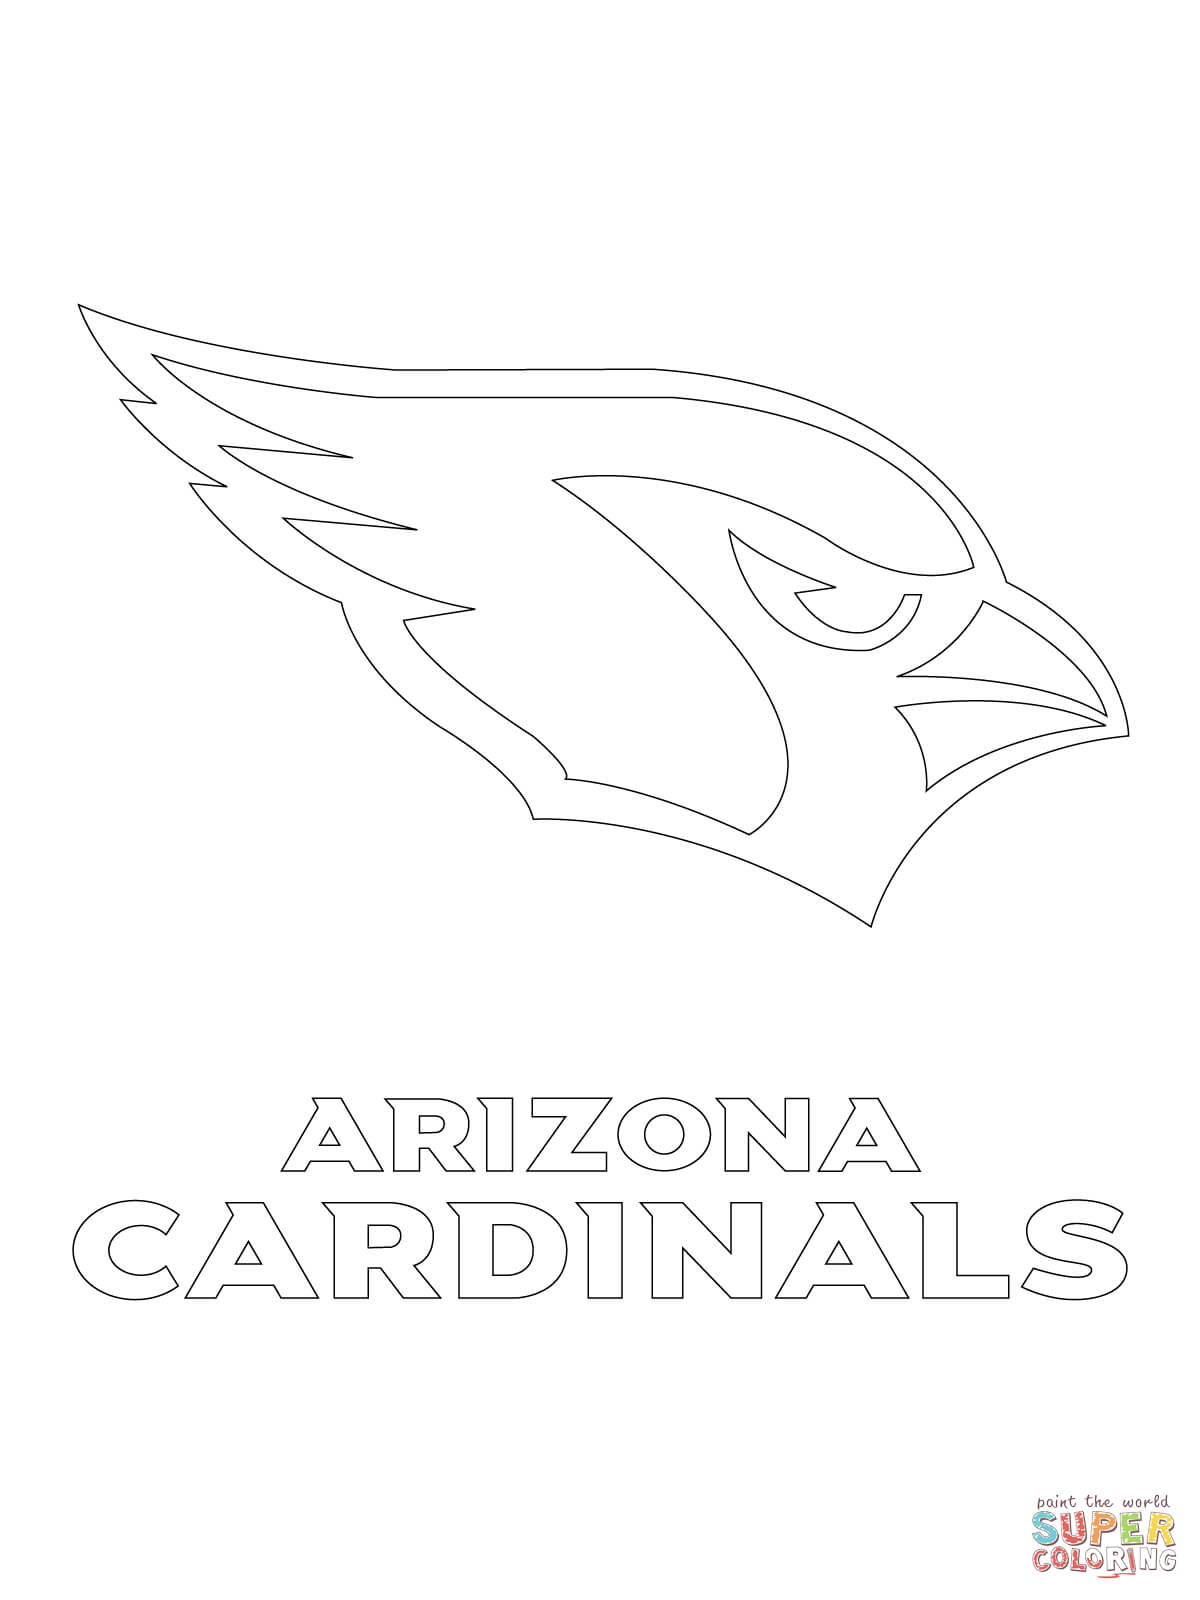 Arizona Cardinals Logo coloring page | Free Printable Coloring Pages